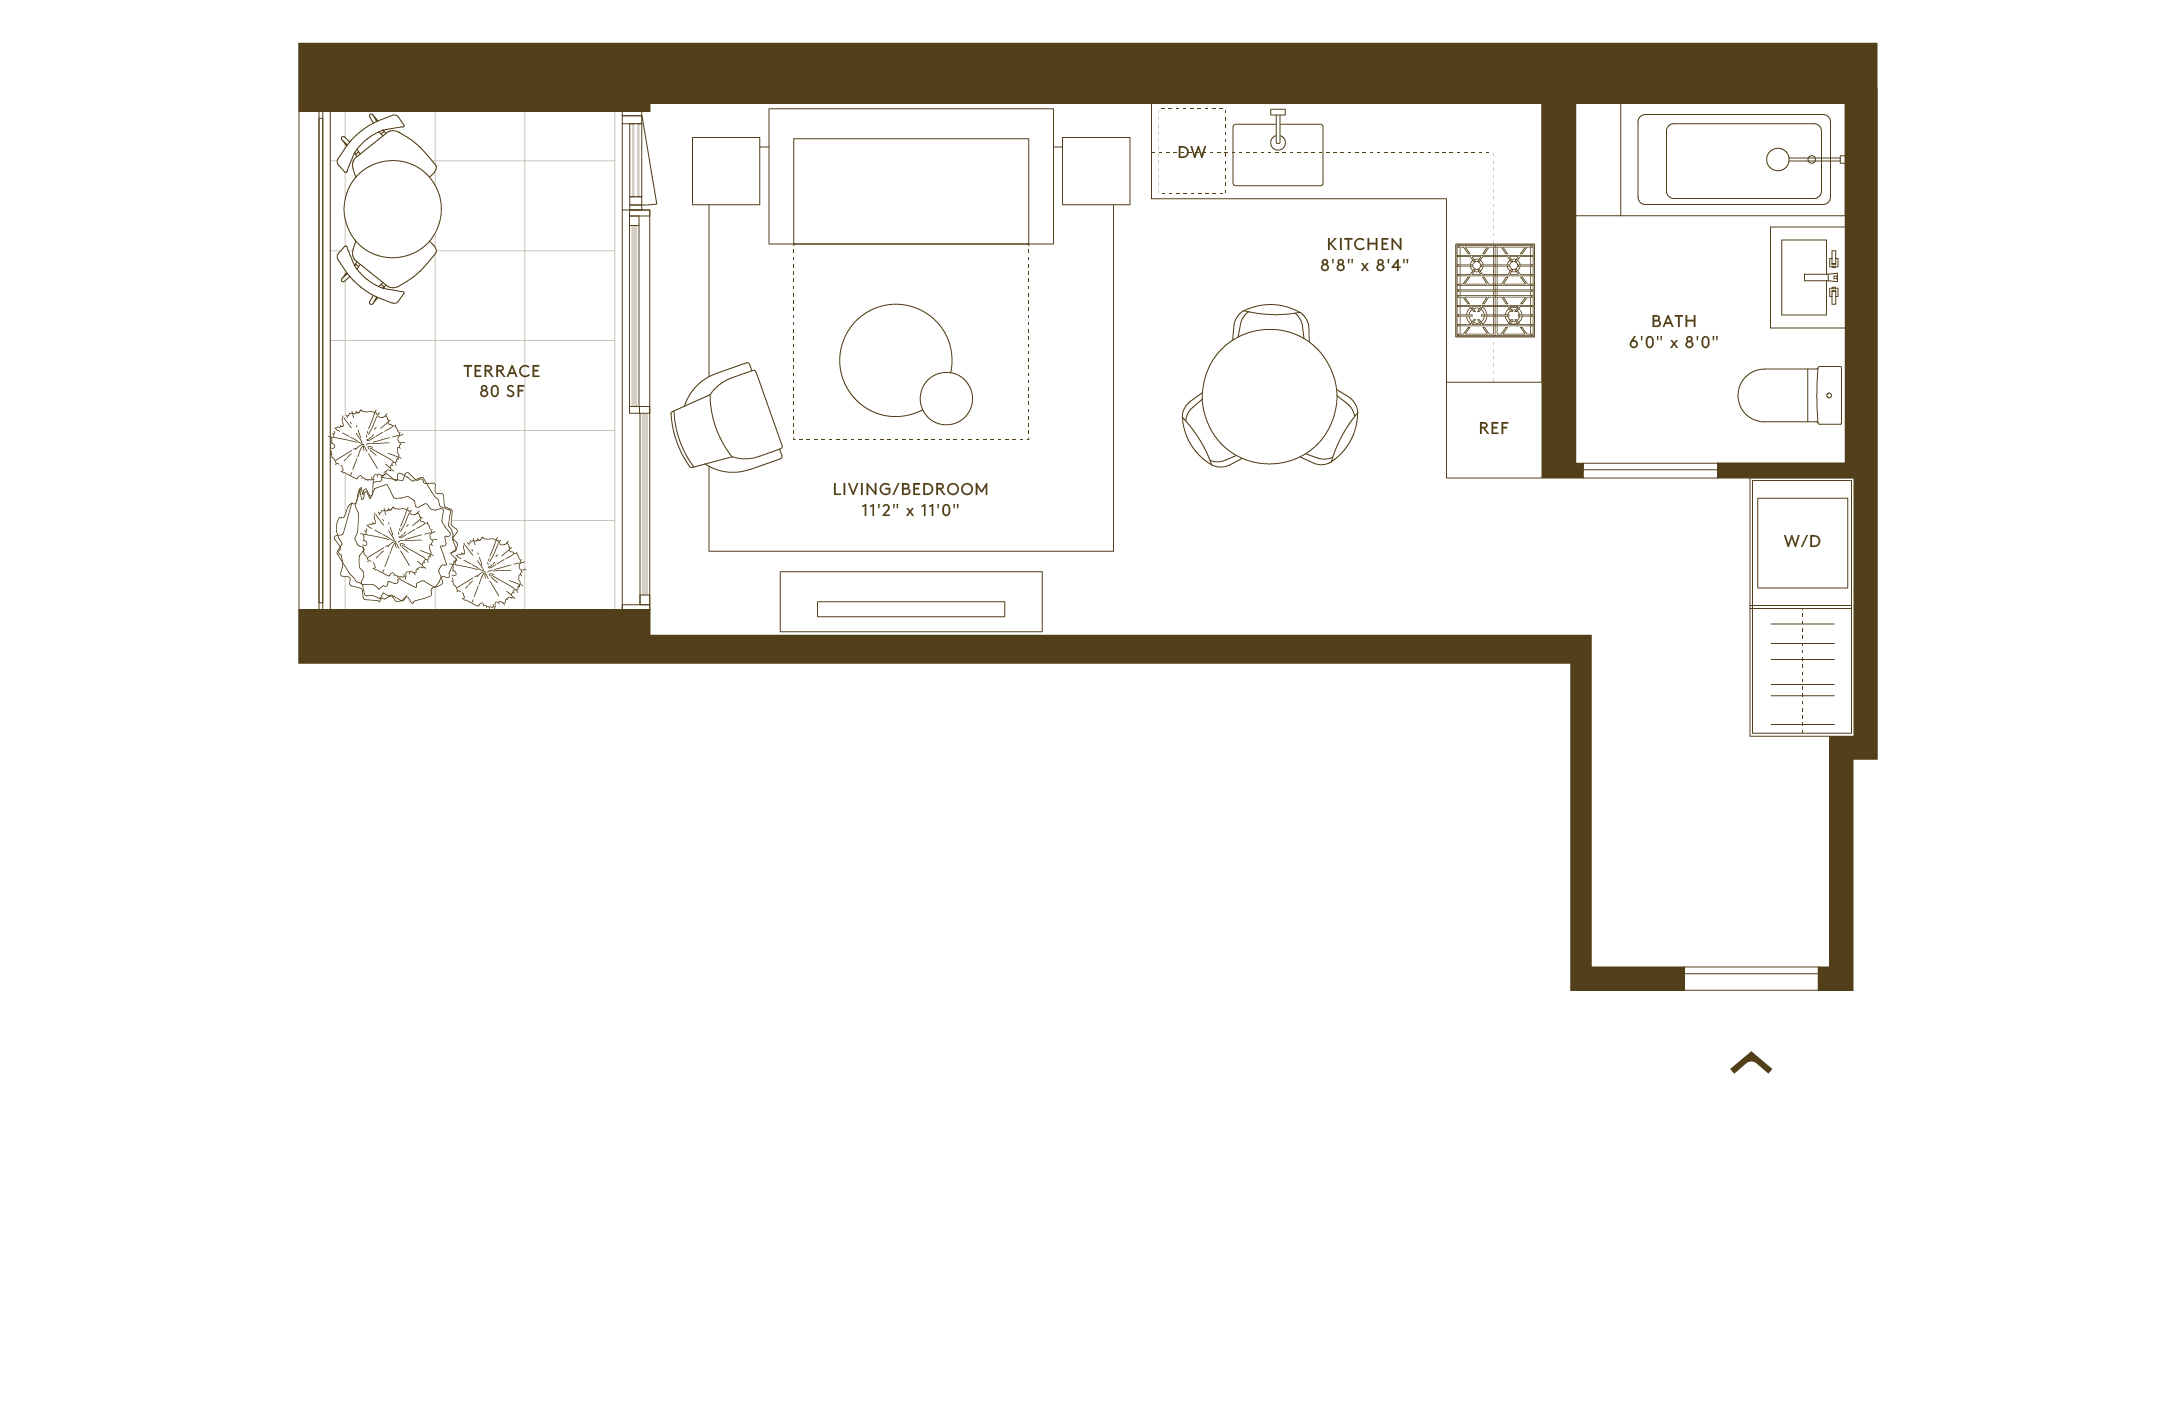 Studio floorplan with terrace at Hendrix House condominium in Kips Bay NYC.